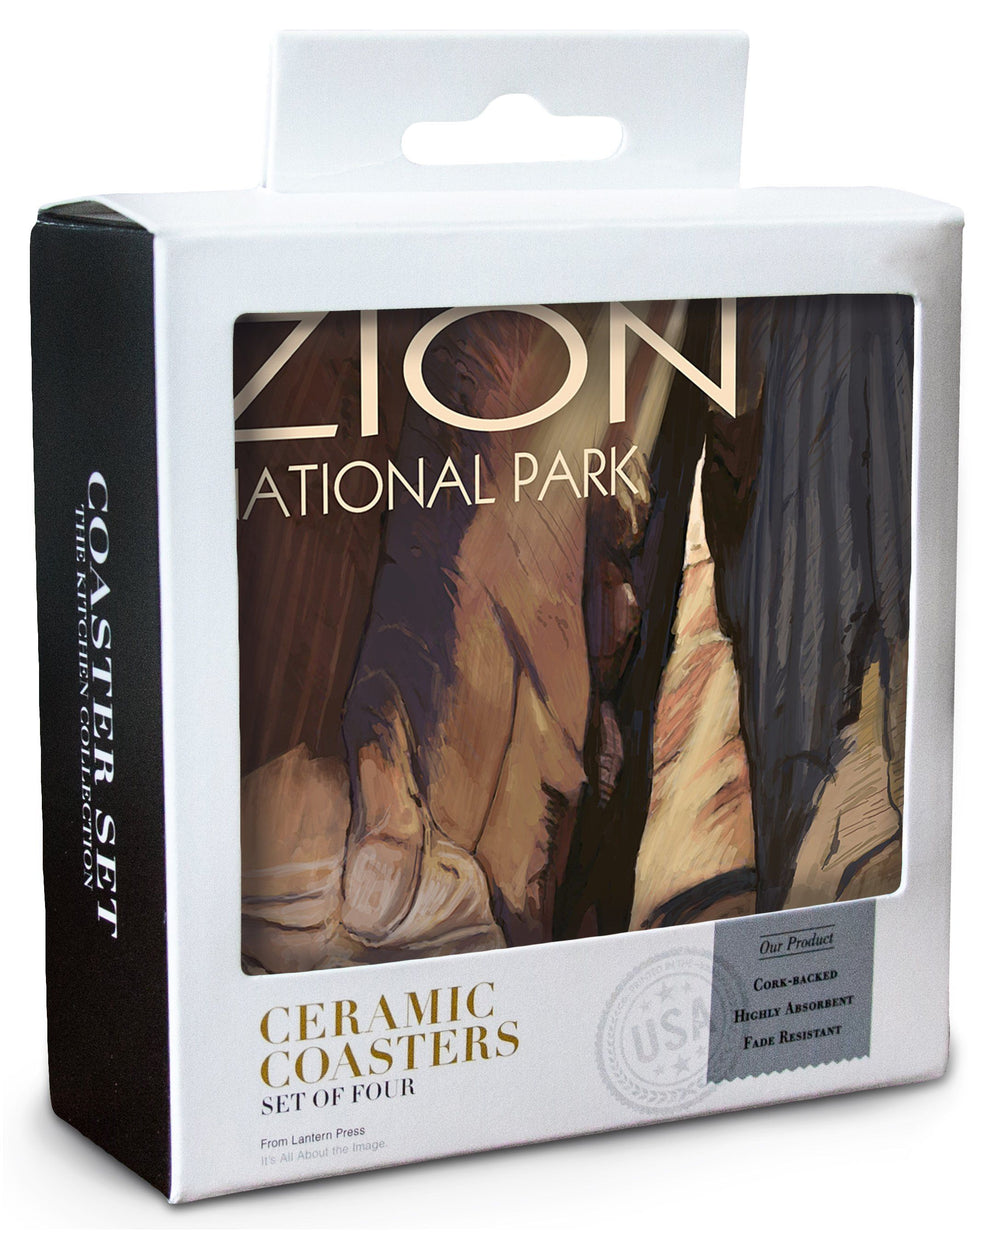 Zion National Park, Utah, The Narrows, Lantern Press Artwork, Coaster Set Coasters Lantern Press 